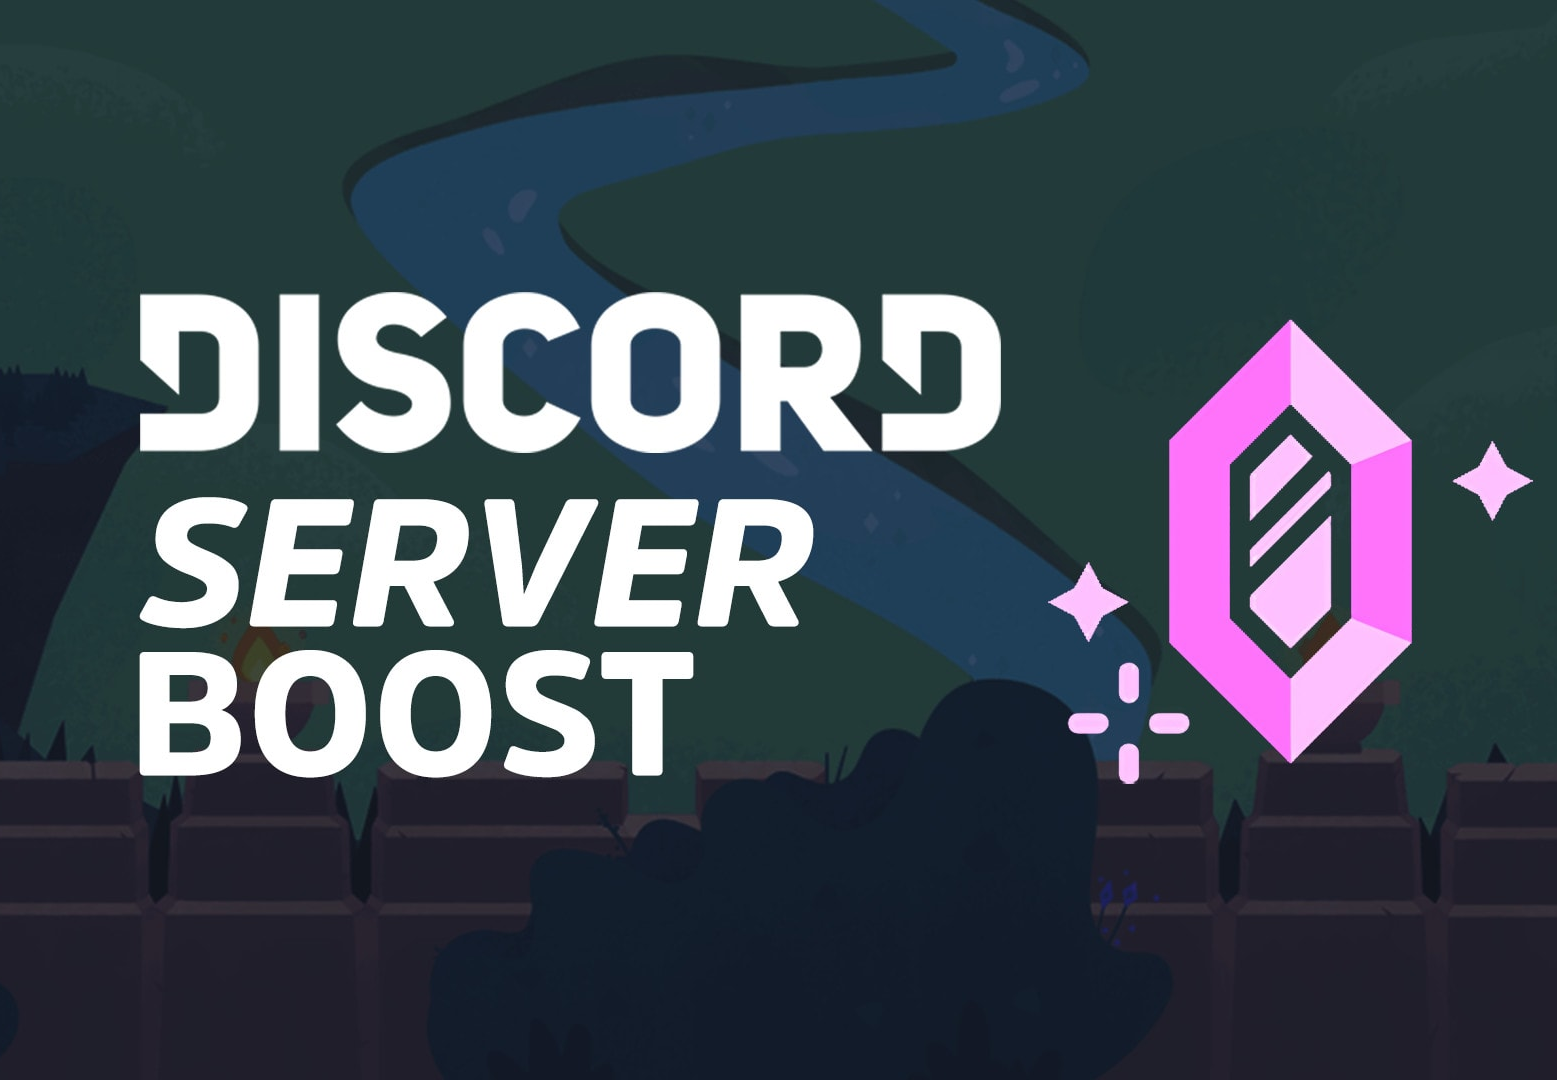 Discord Server - 14x Boost - 1 Week